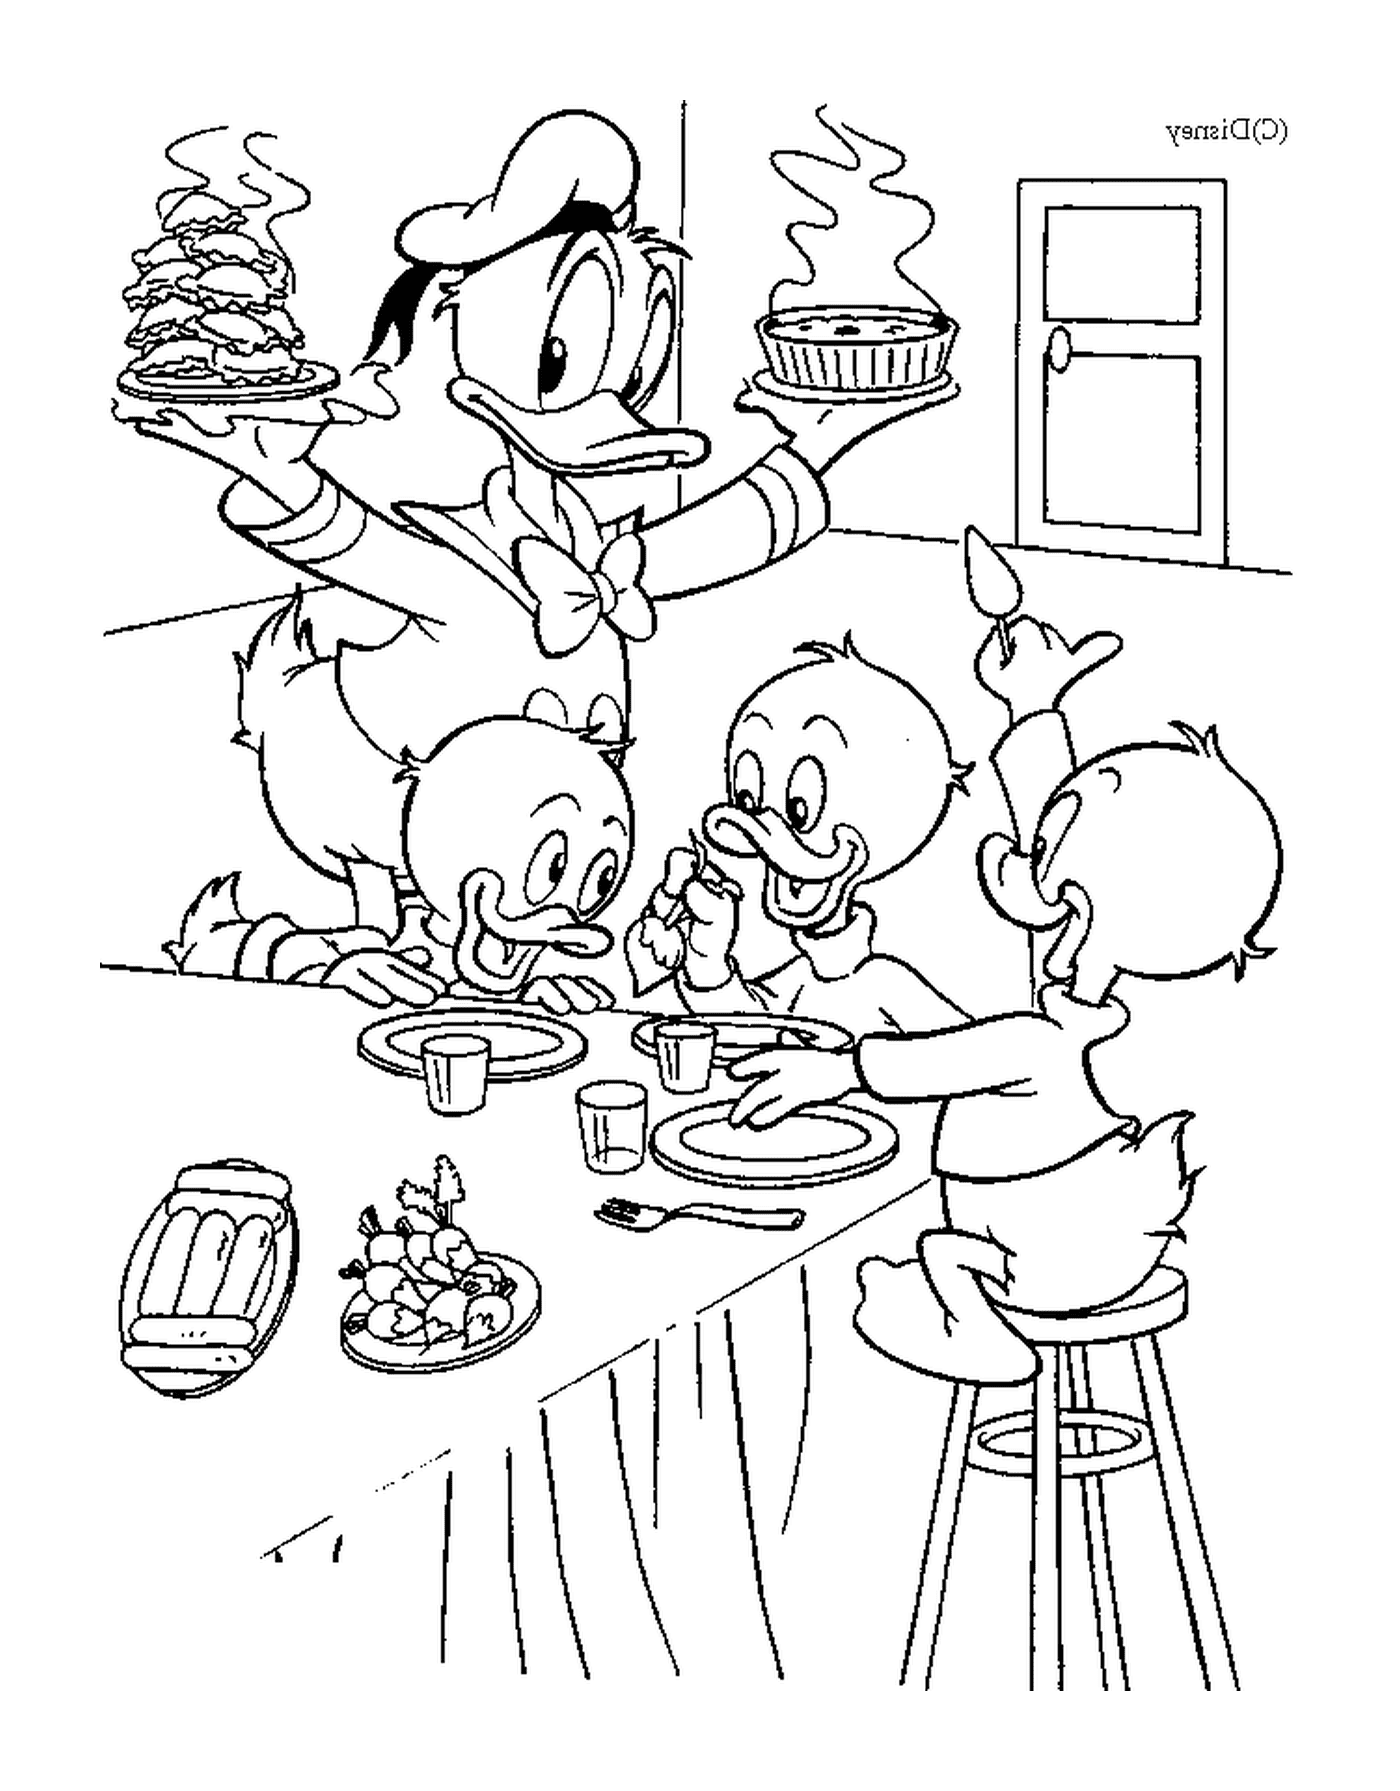  Donald se encarga de alimentar a sus sobrinos 